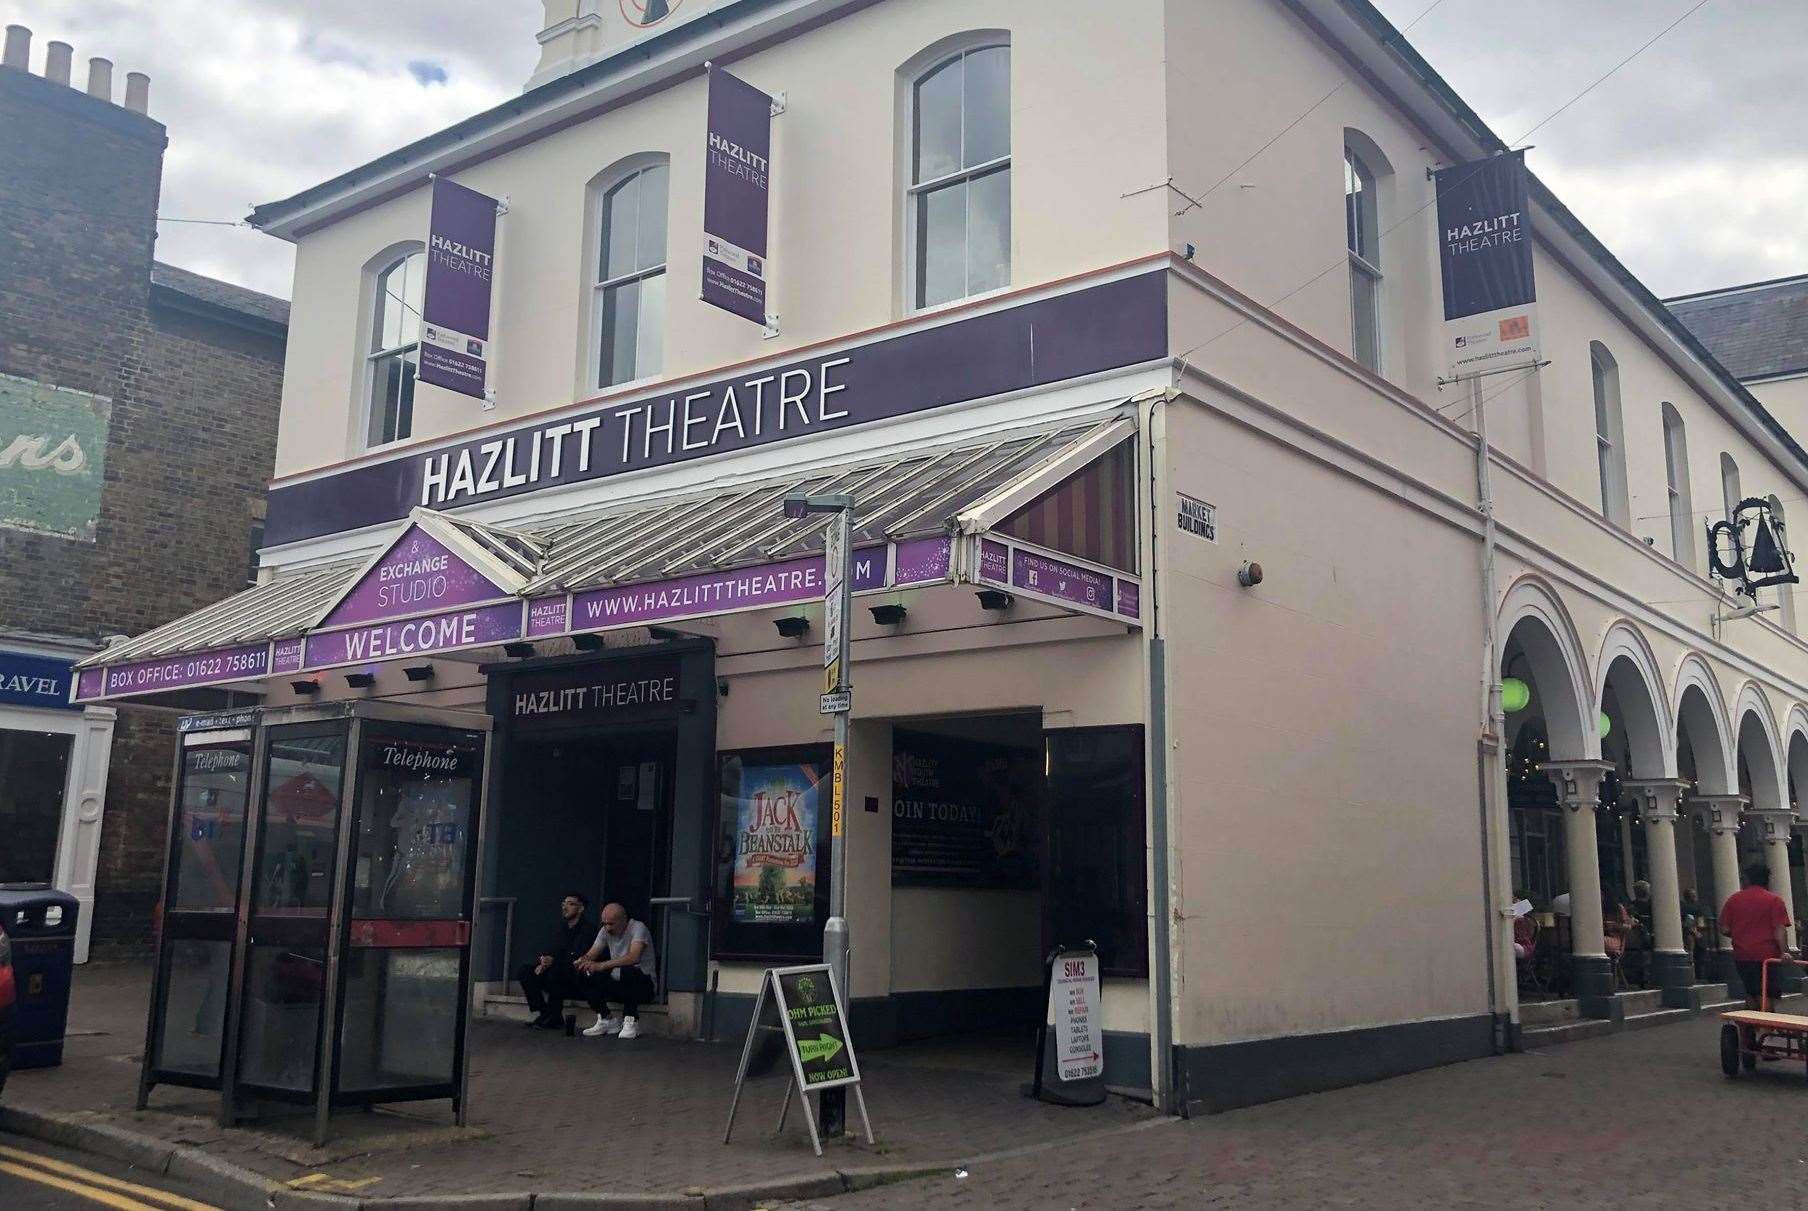 Hazlitt Theatre in Earl Street, Maidstone